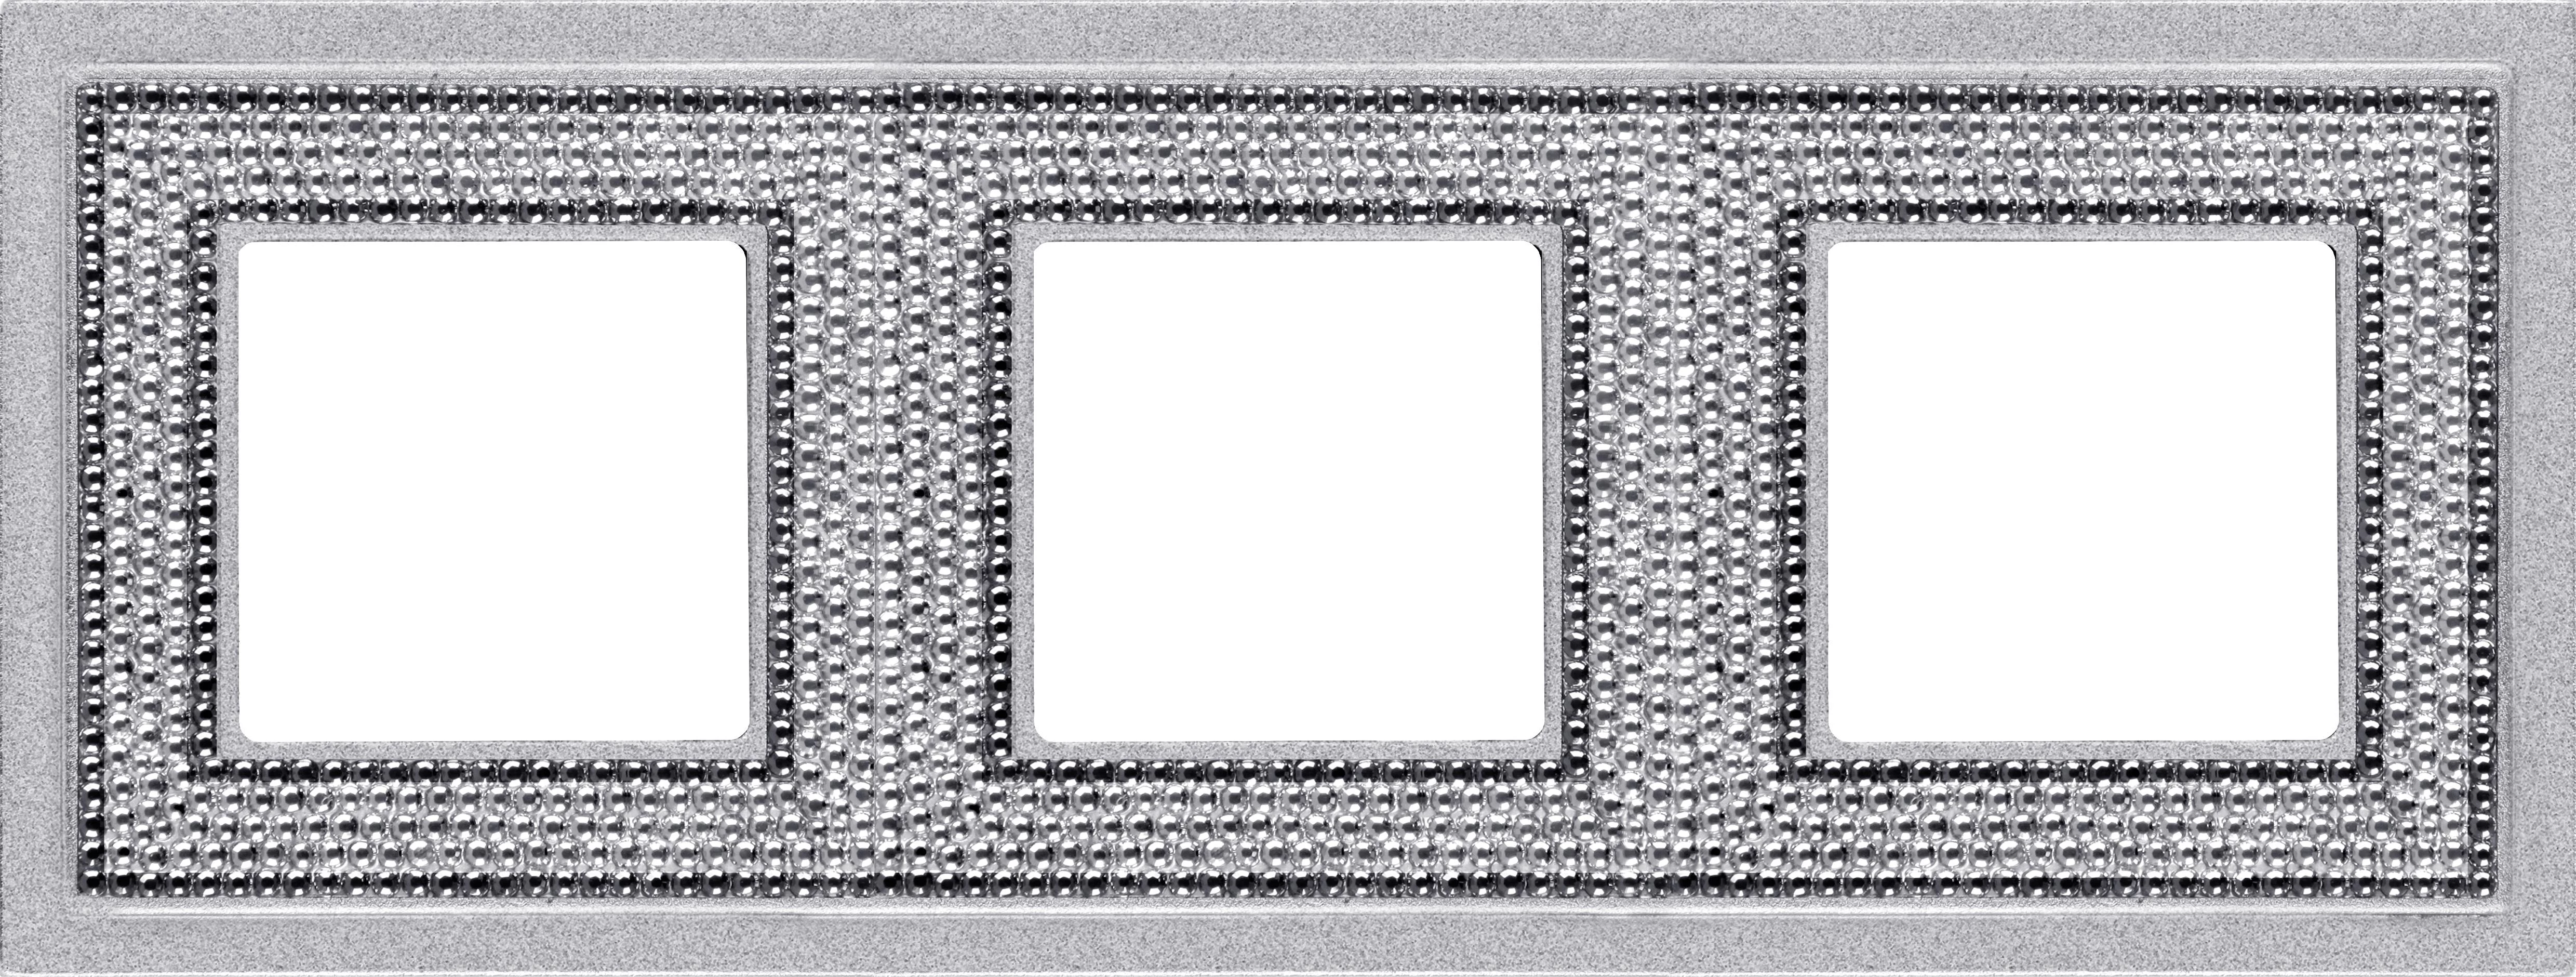 артикул FD01293CB название Рамка 3-ая (тройная), Fede, Серия Crystal De Luxe Art, Светлый хром